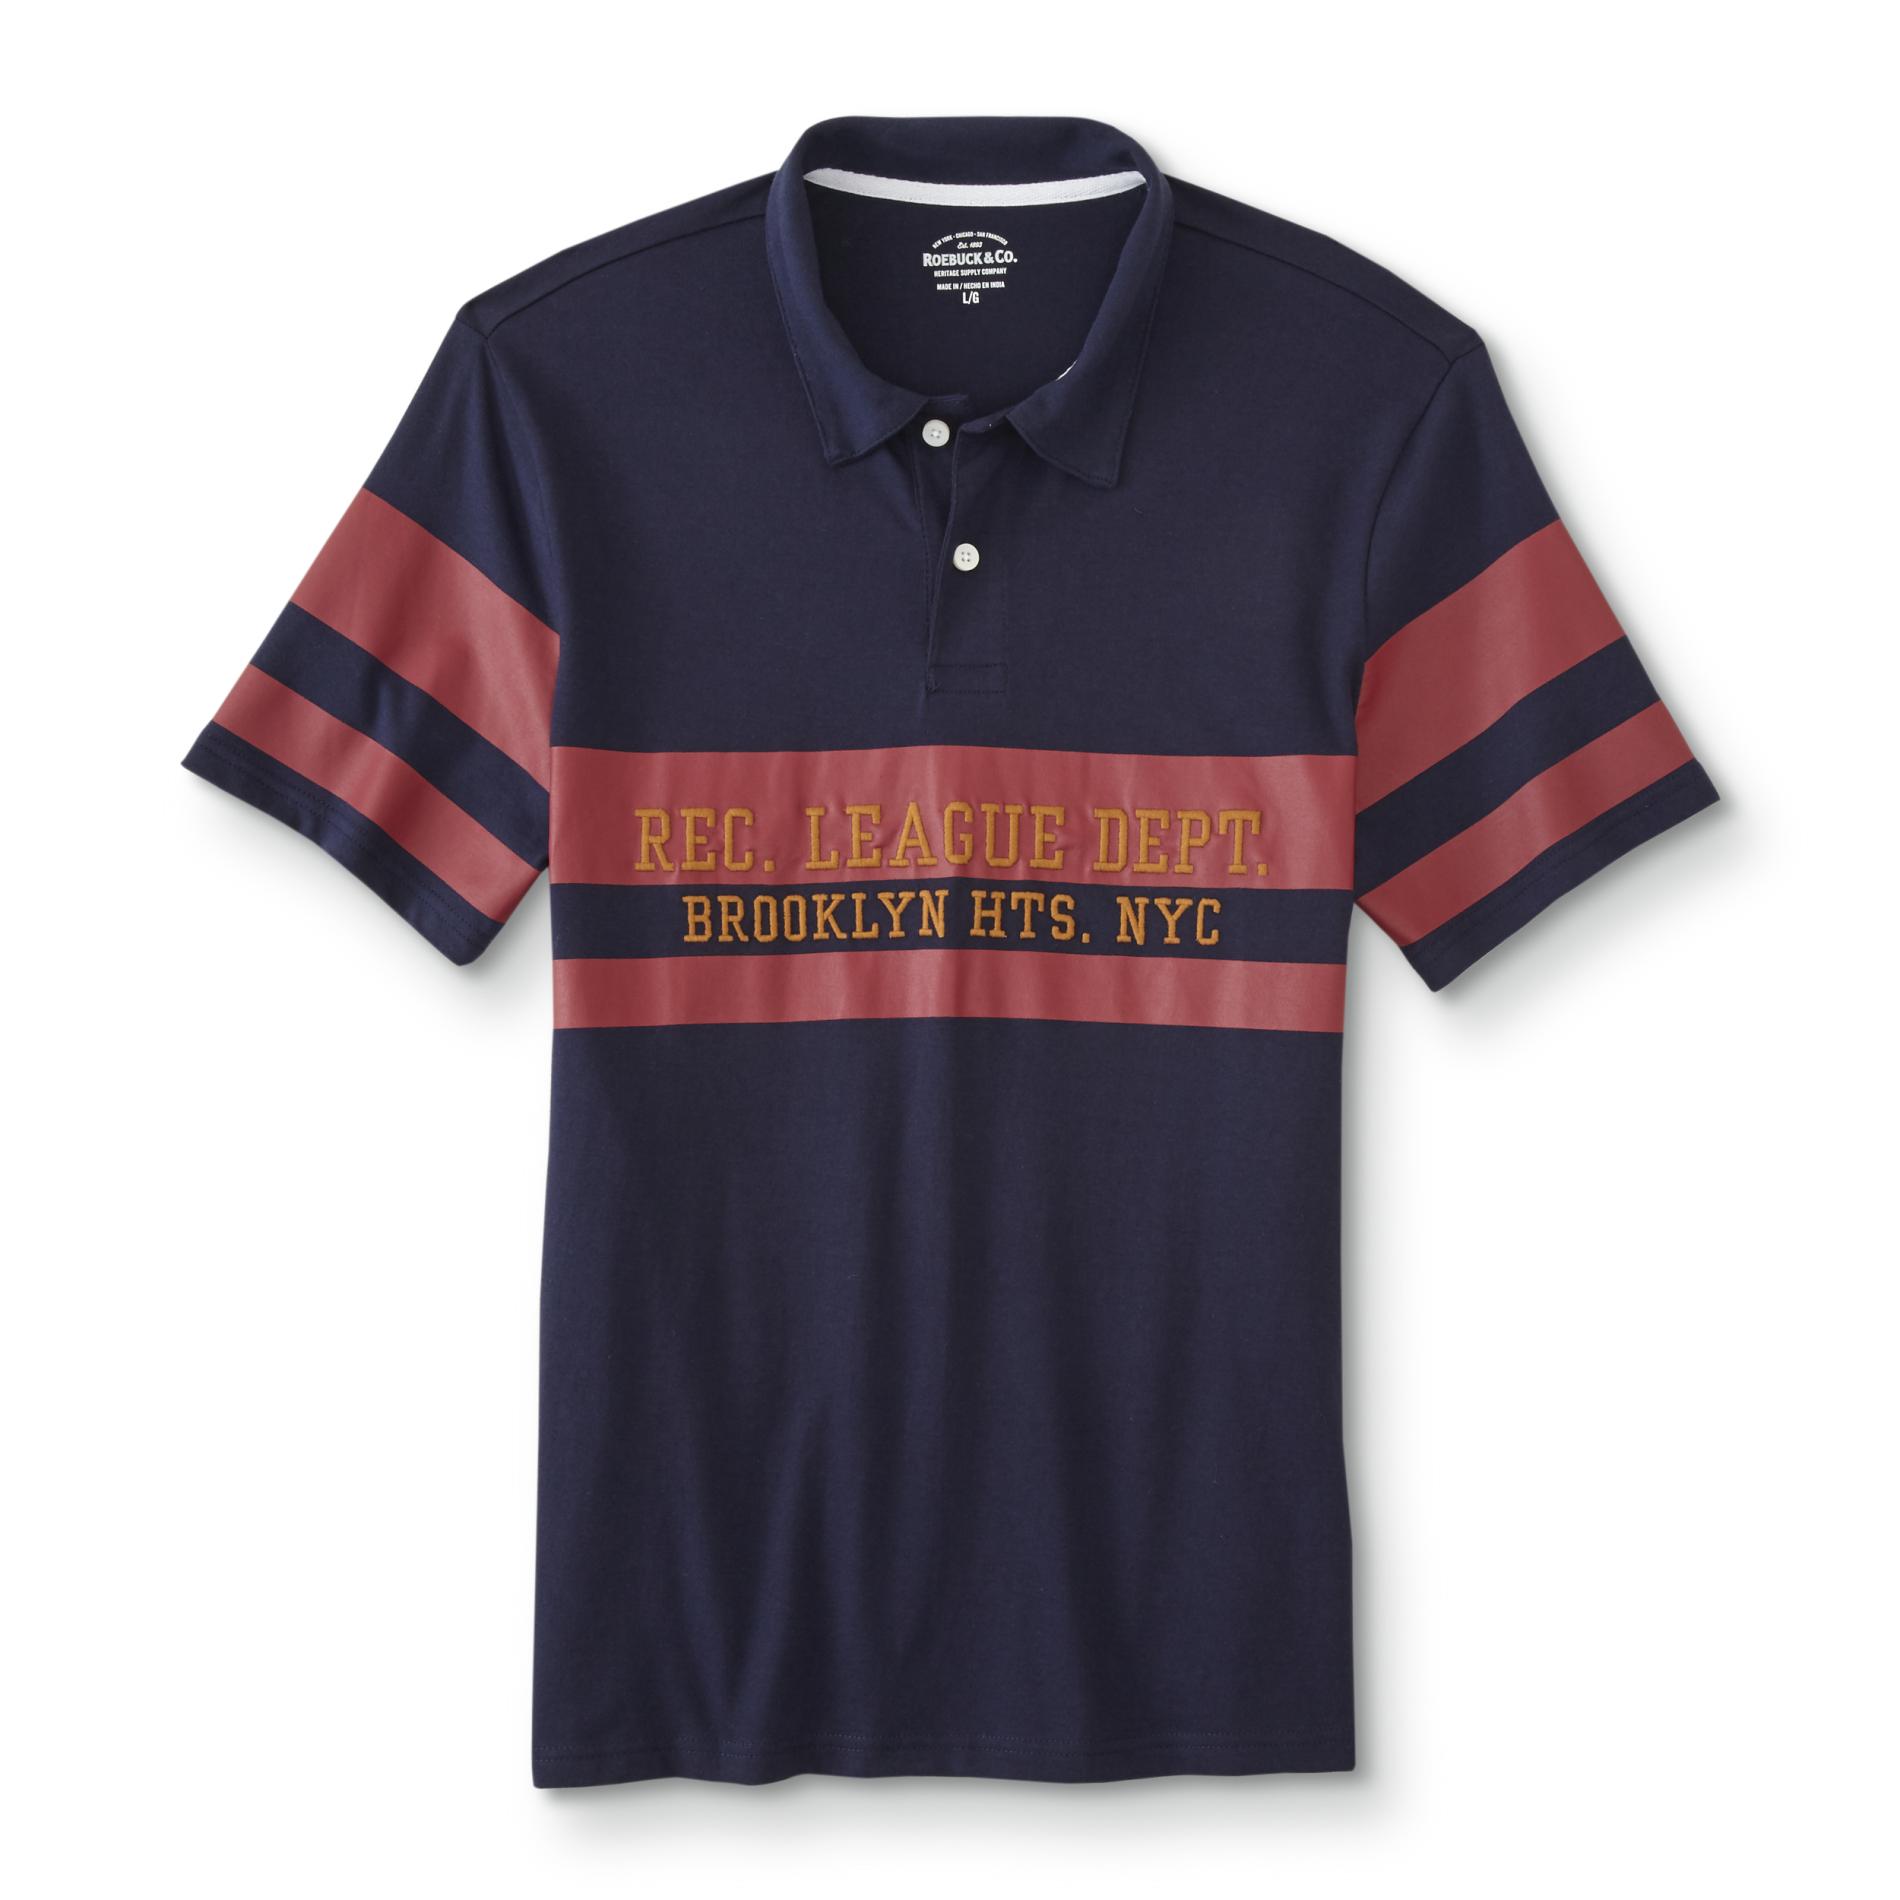 Roebuck & Co. Young Men's Polo Shirt - Striped